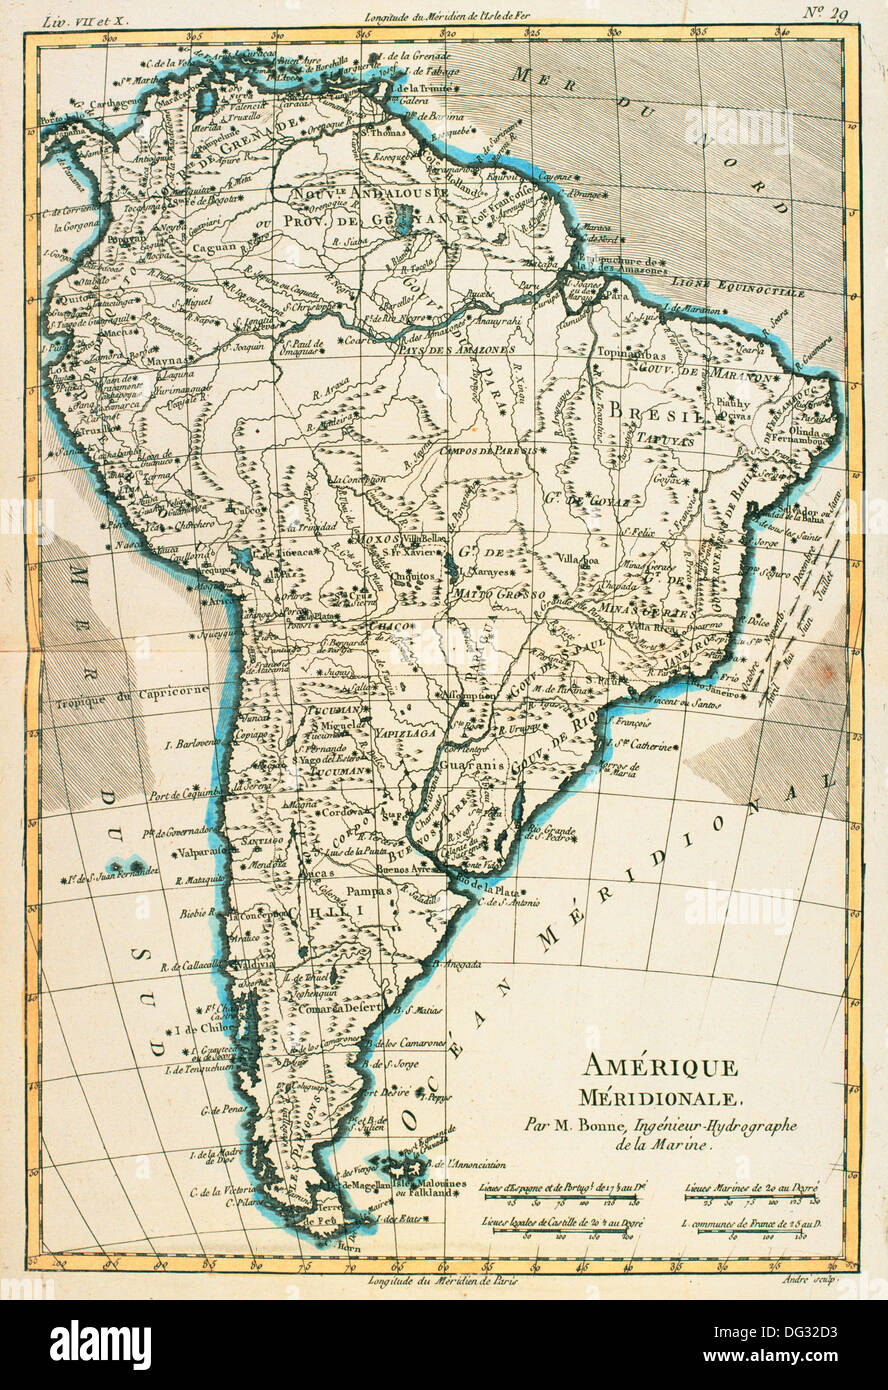 Map of South America circa 1760.  From Atlas de Toutes Les Parties Connues du Globe Terrestre by Cartographer Rigobert Bonne. Stock Photo